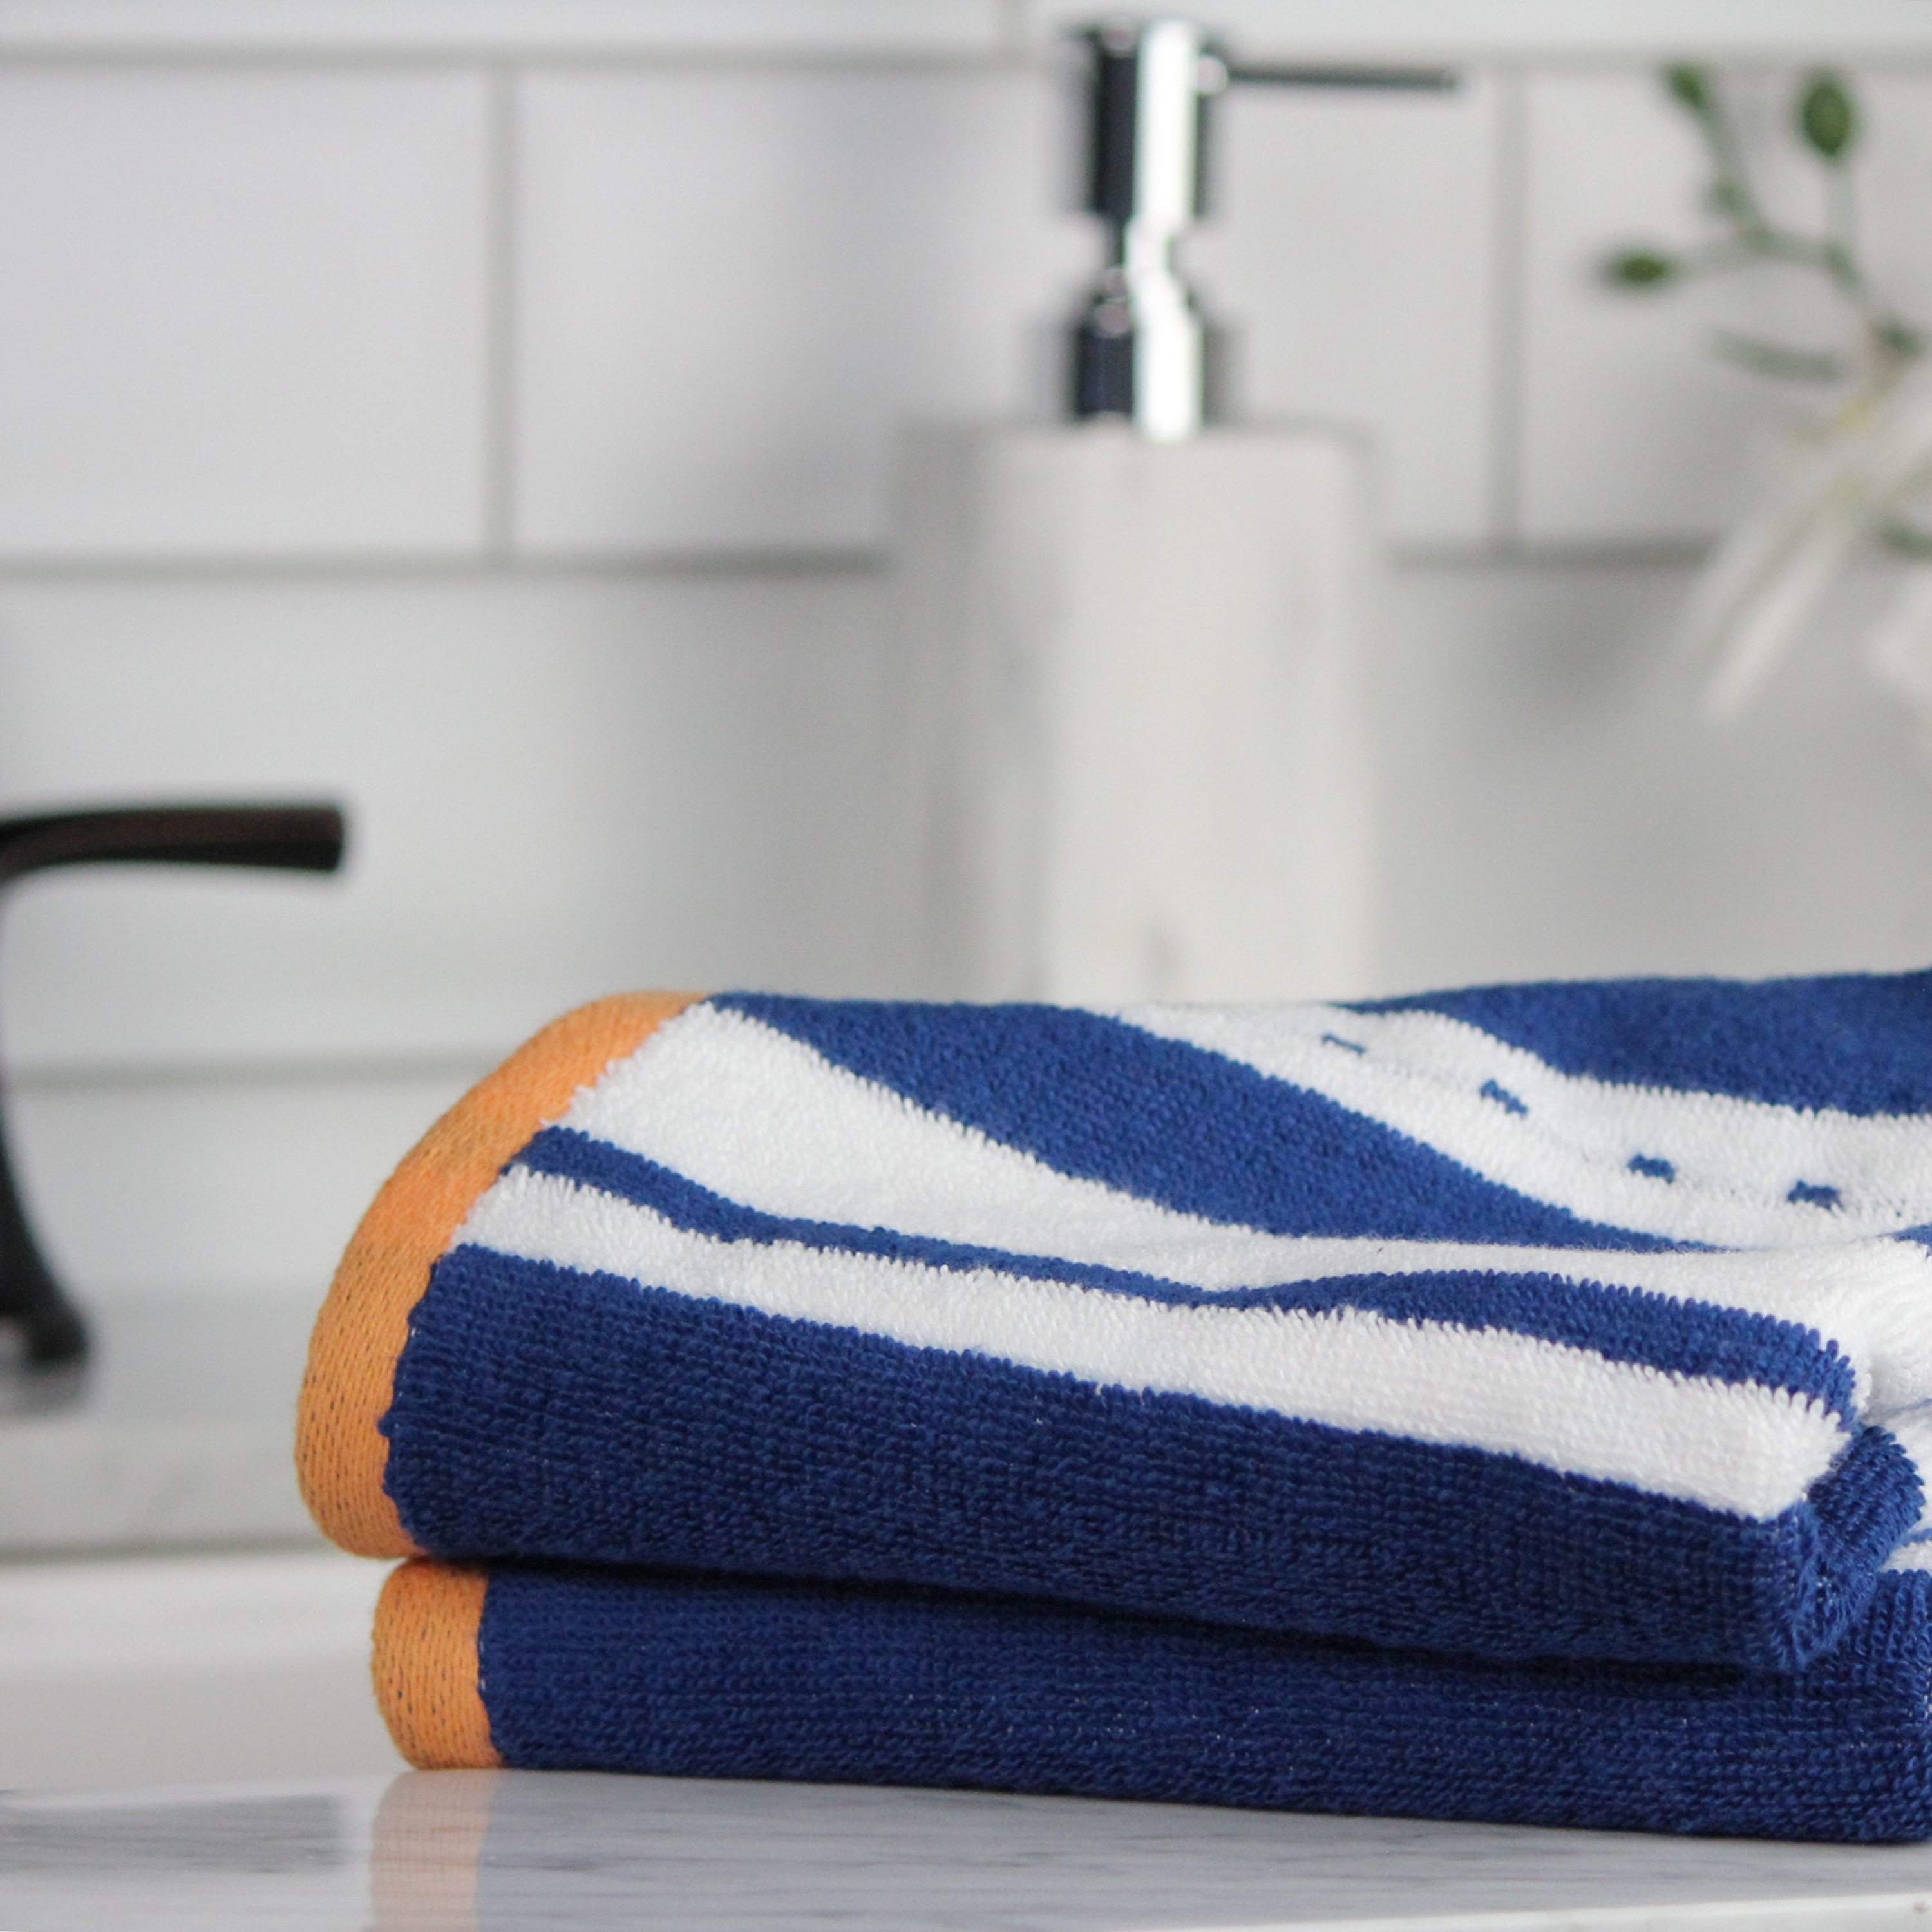 blue striped towels bathroom linen